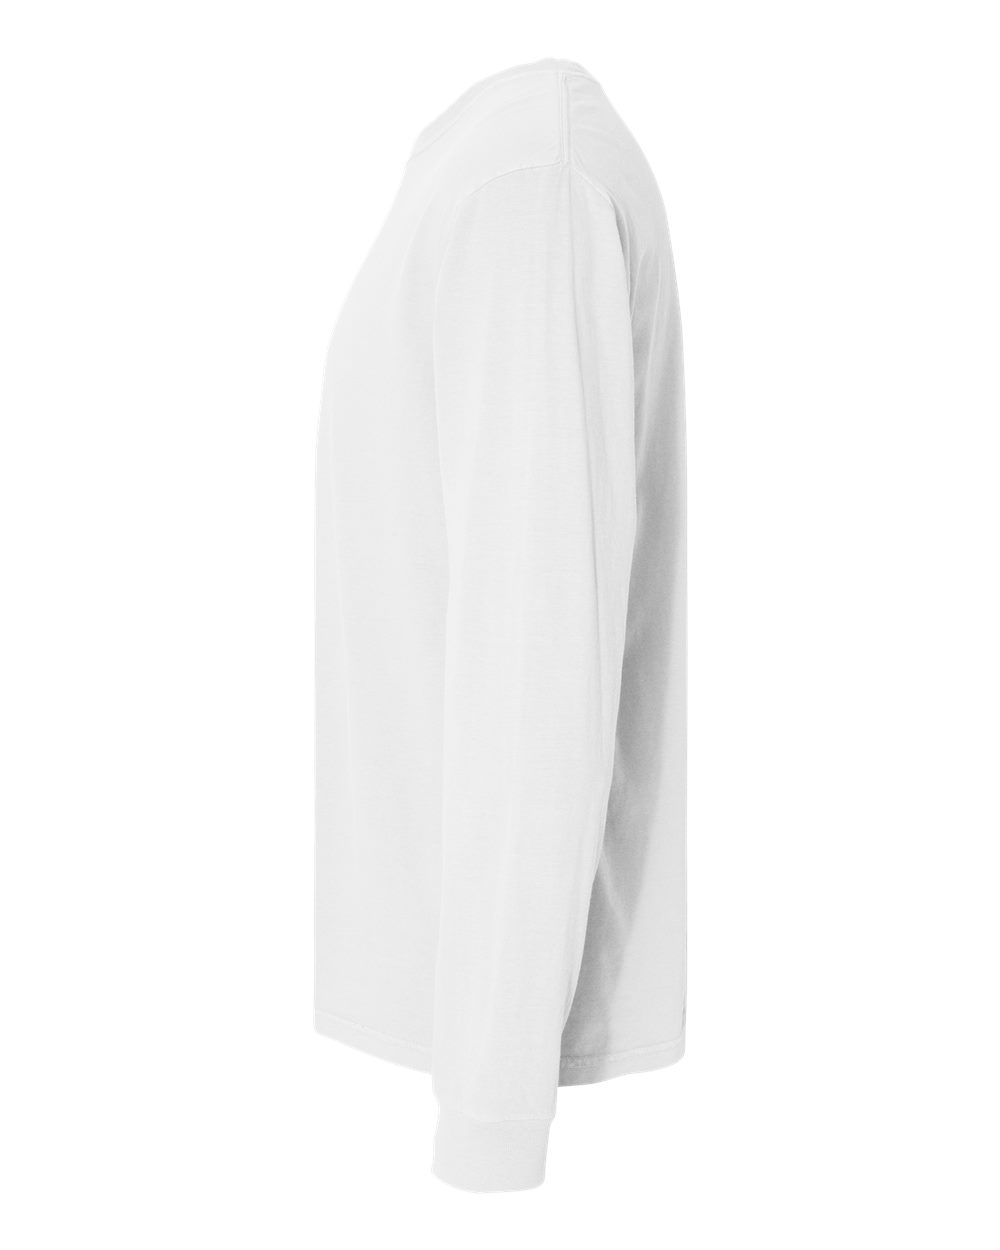 Garment-Dyed Heavyweight Long Sleeve T-Shirt - Comfort Colors 6014